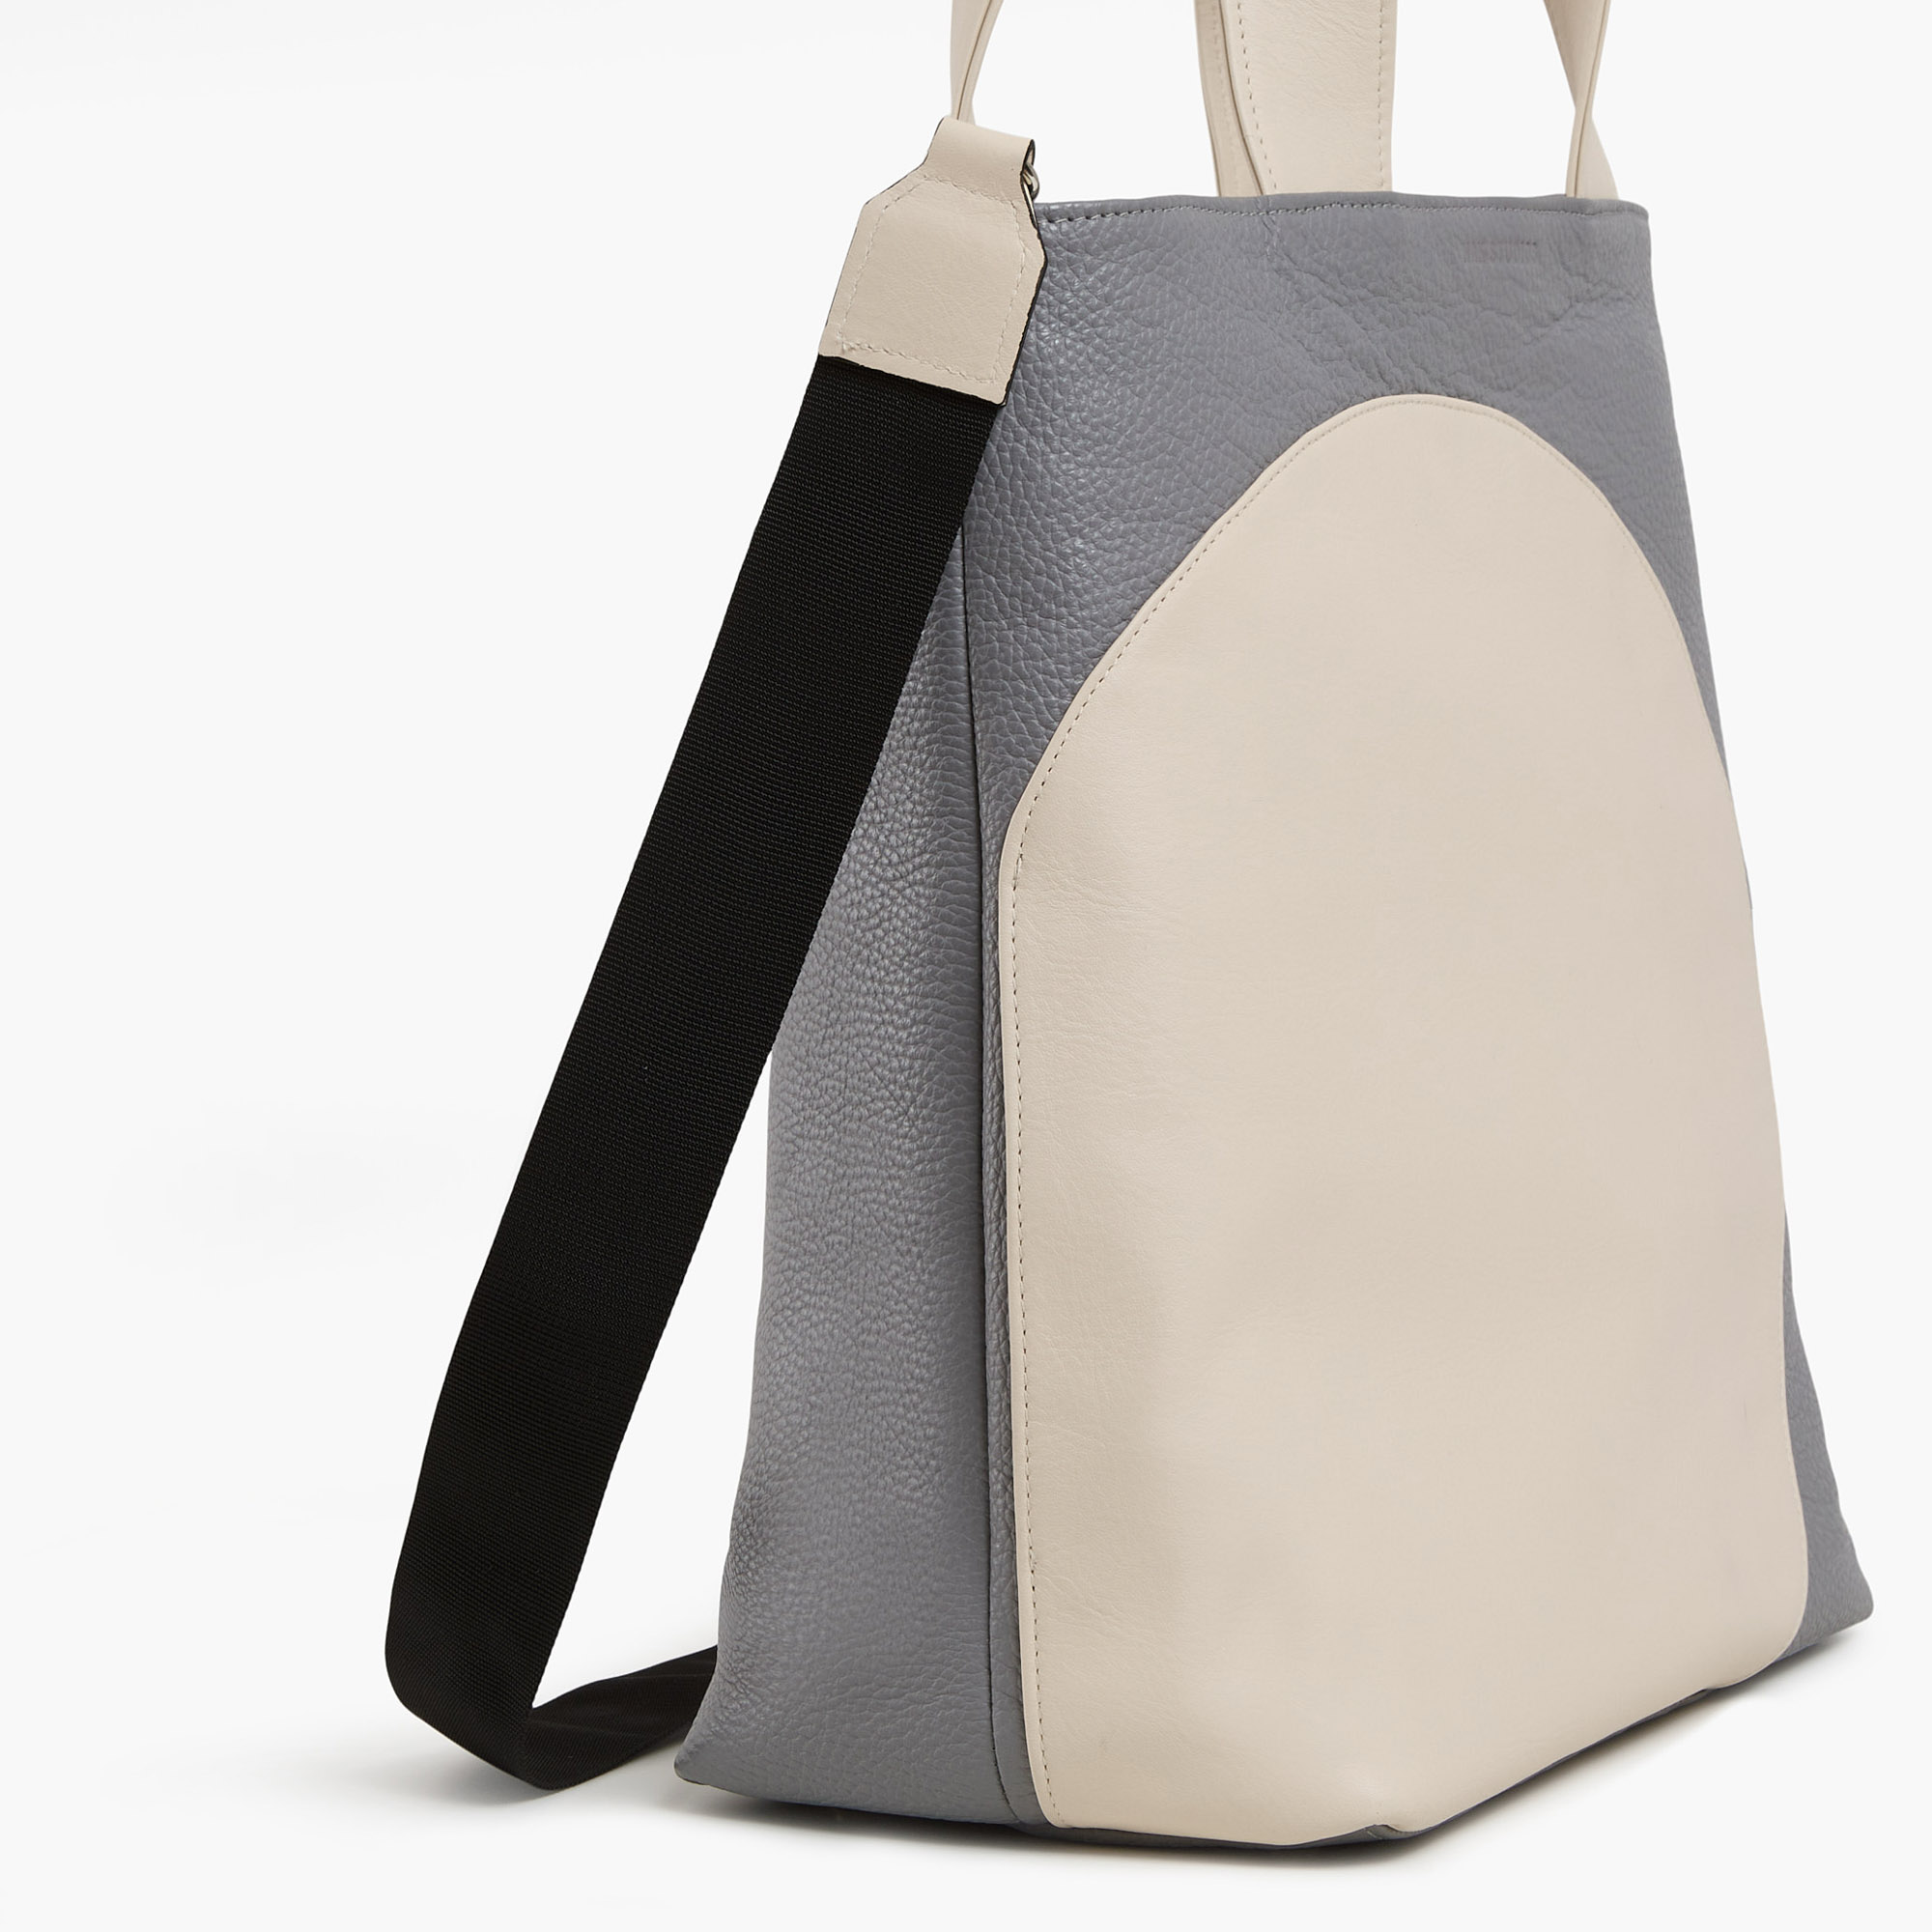 Leather handbag in beige-gray color